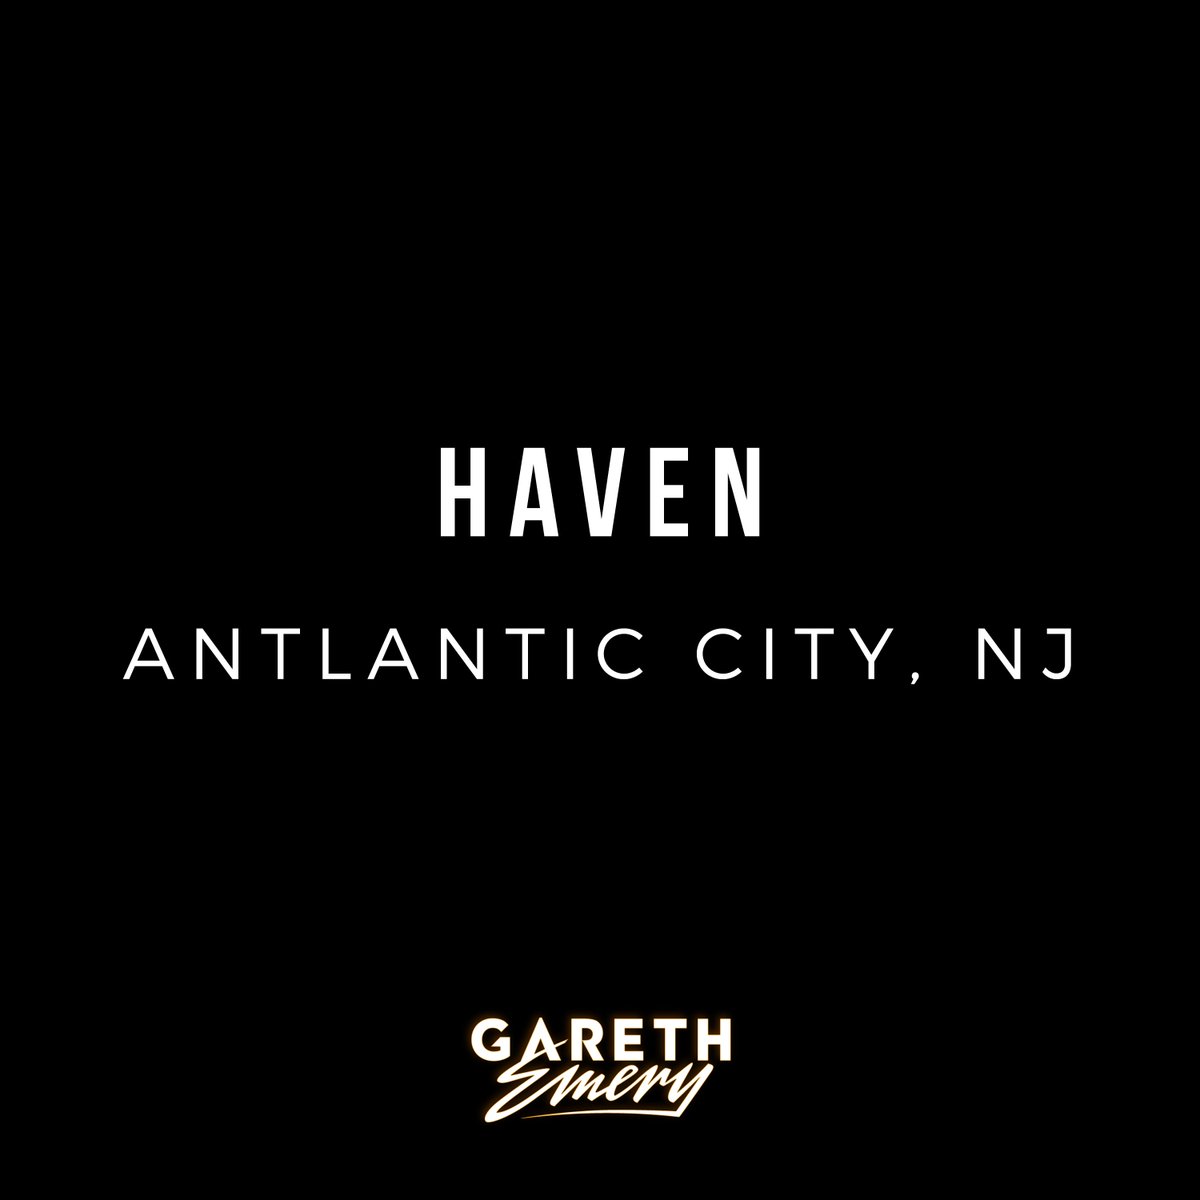 Atlantic City tonight! 🎉🎉🎉  Get ready @HavenAC 😎   — Team GE https://t.co/NJMENRIuek